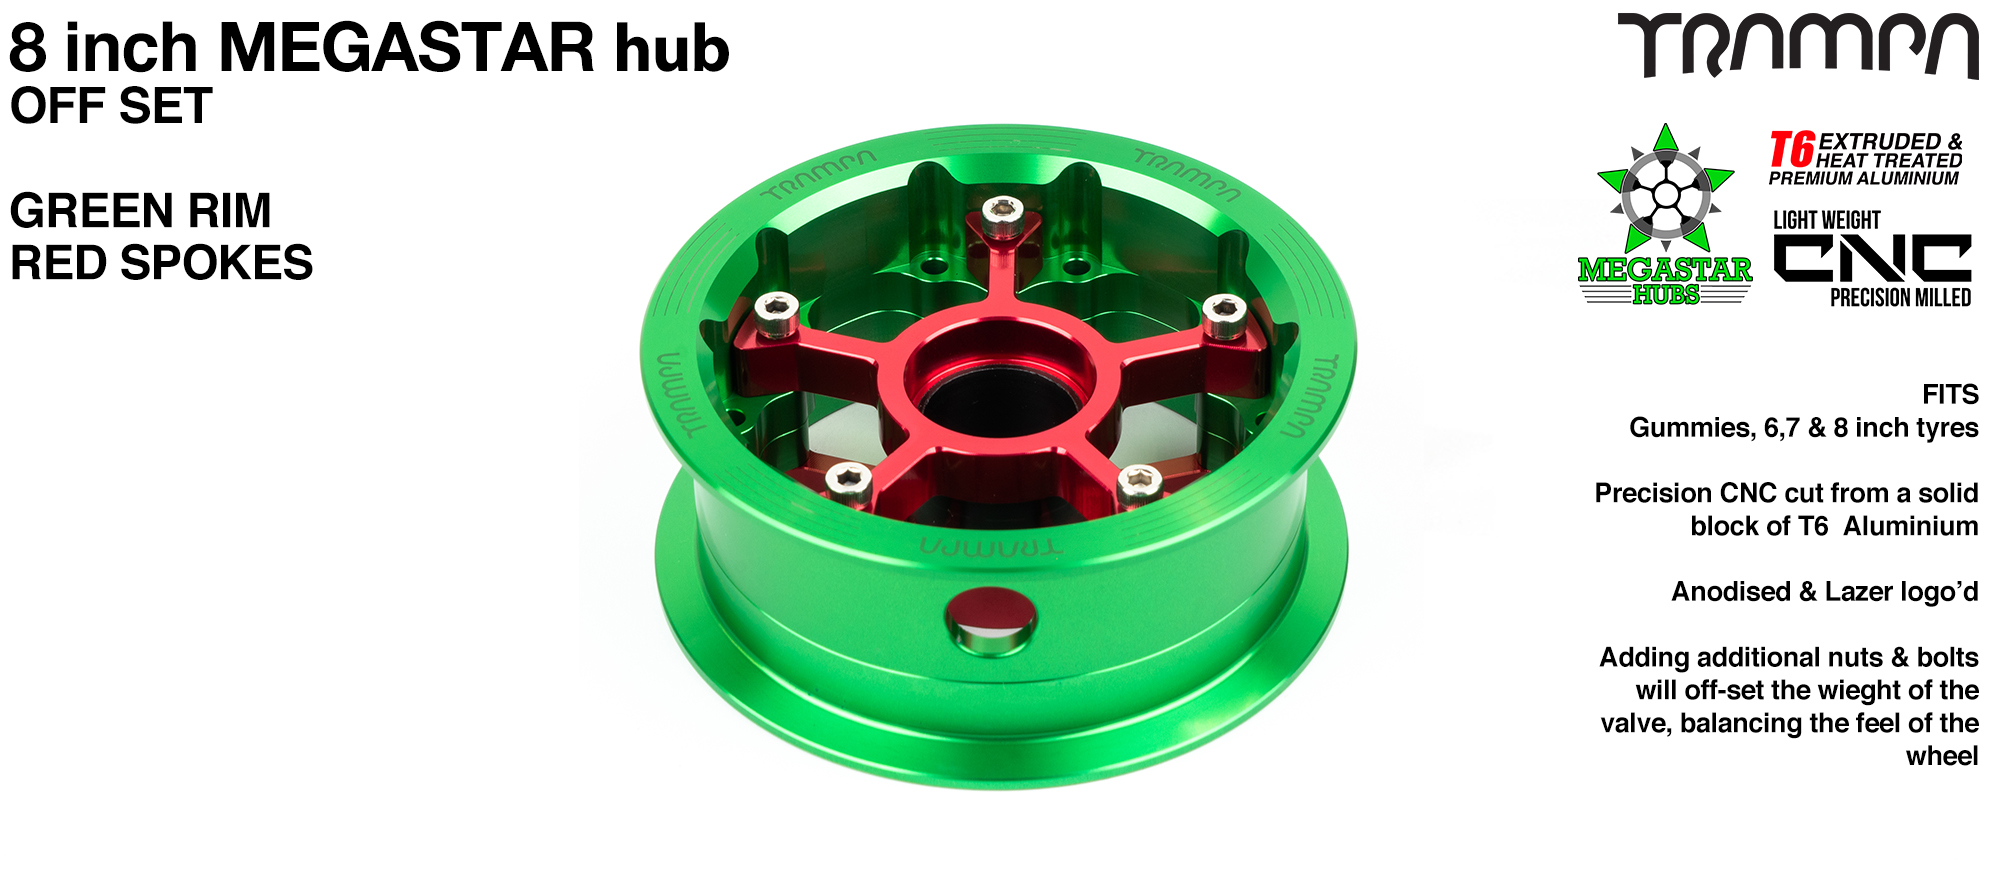 OFF-SET MEGASTAR 8 Hub 3.75 x 2 Inch - GREEN Rim with RED Spokes